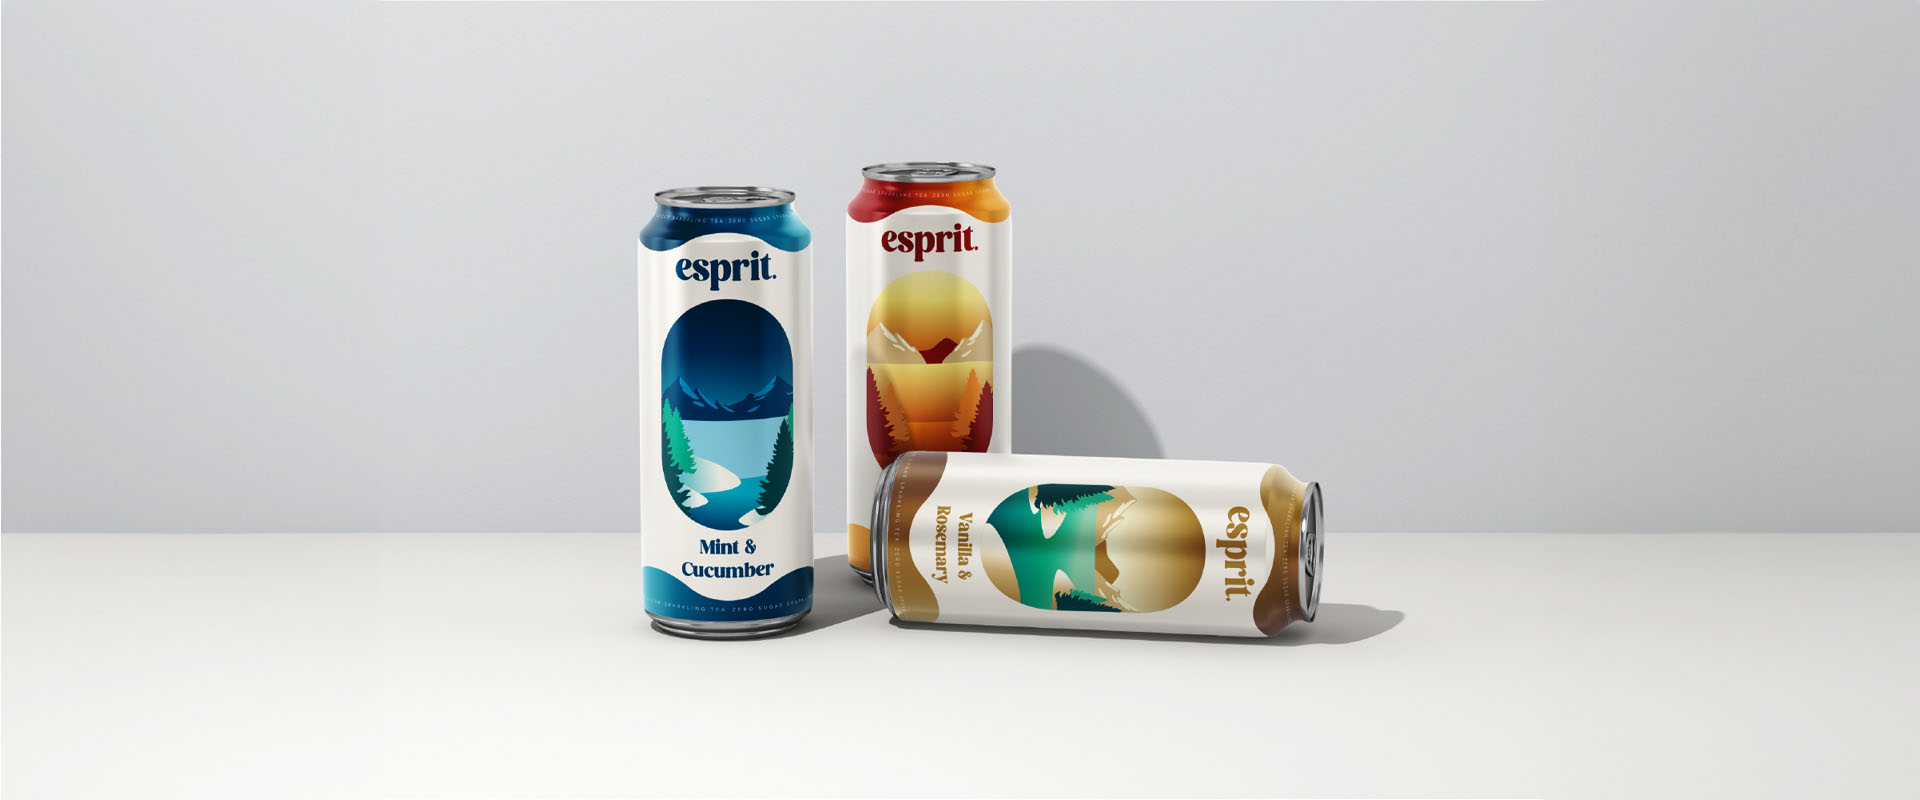 Esprit Sparkling Tea Brand Concept by EV Branding